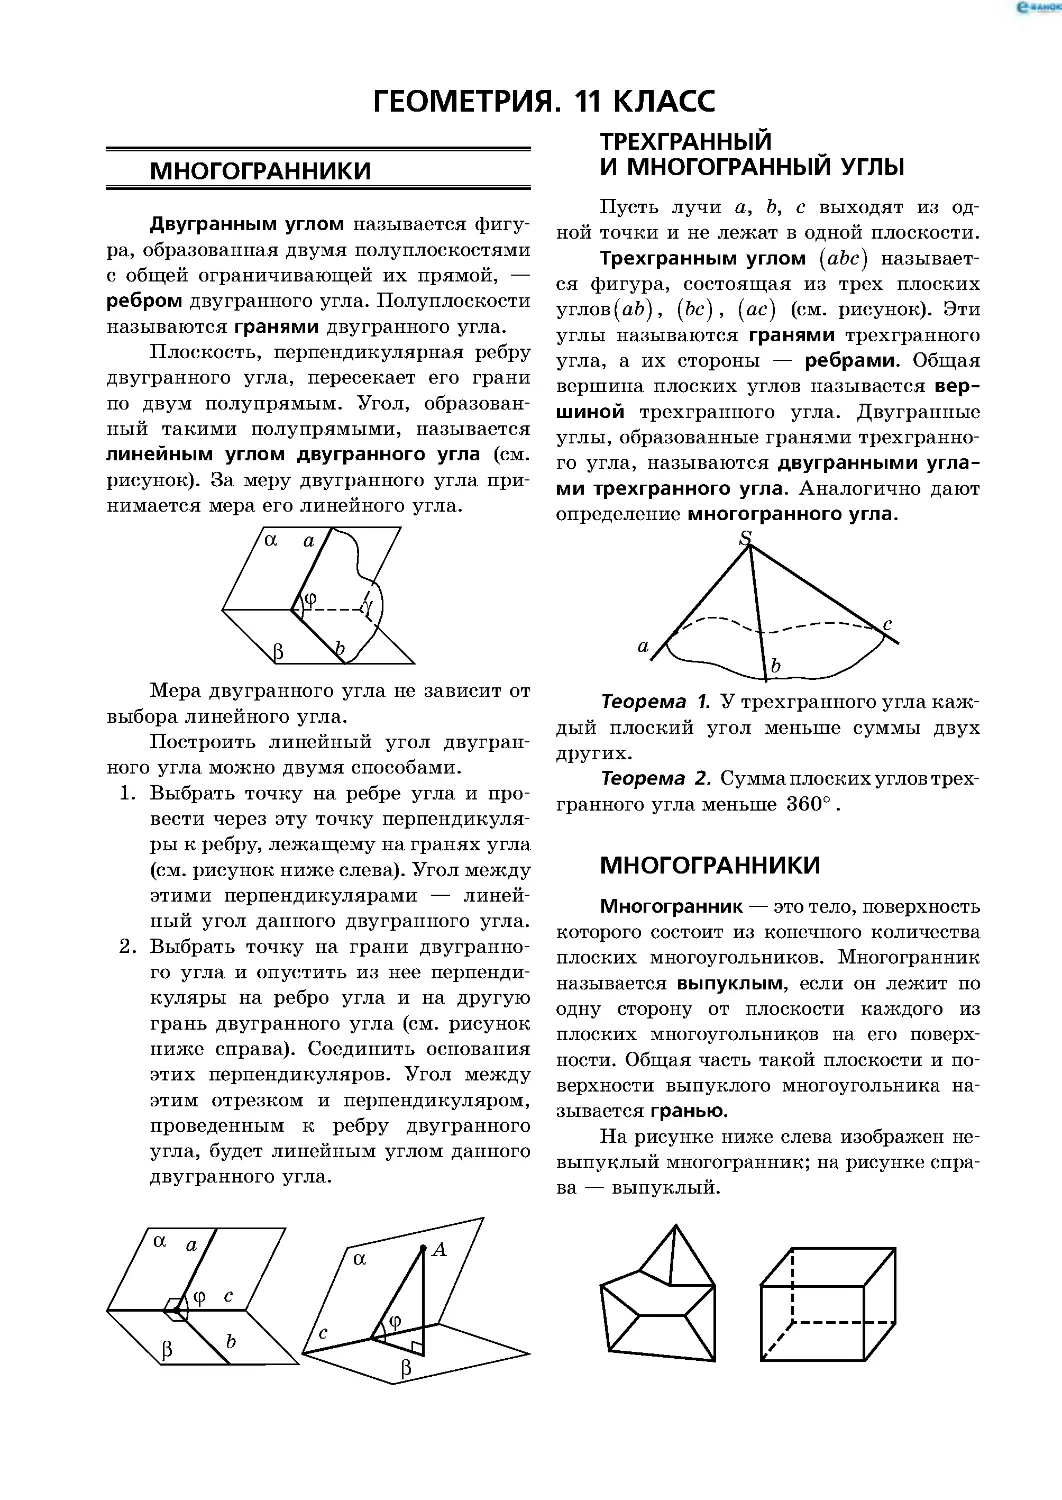 Геометрия. 11 класс
Многогранники